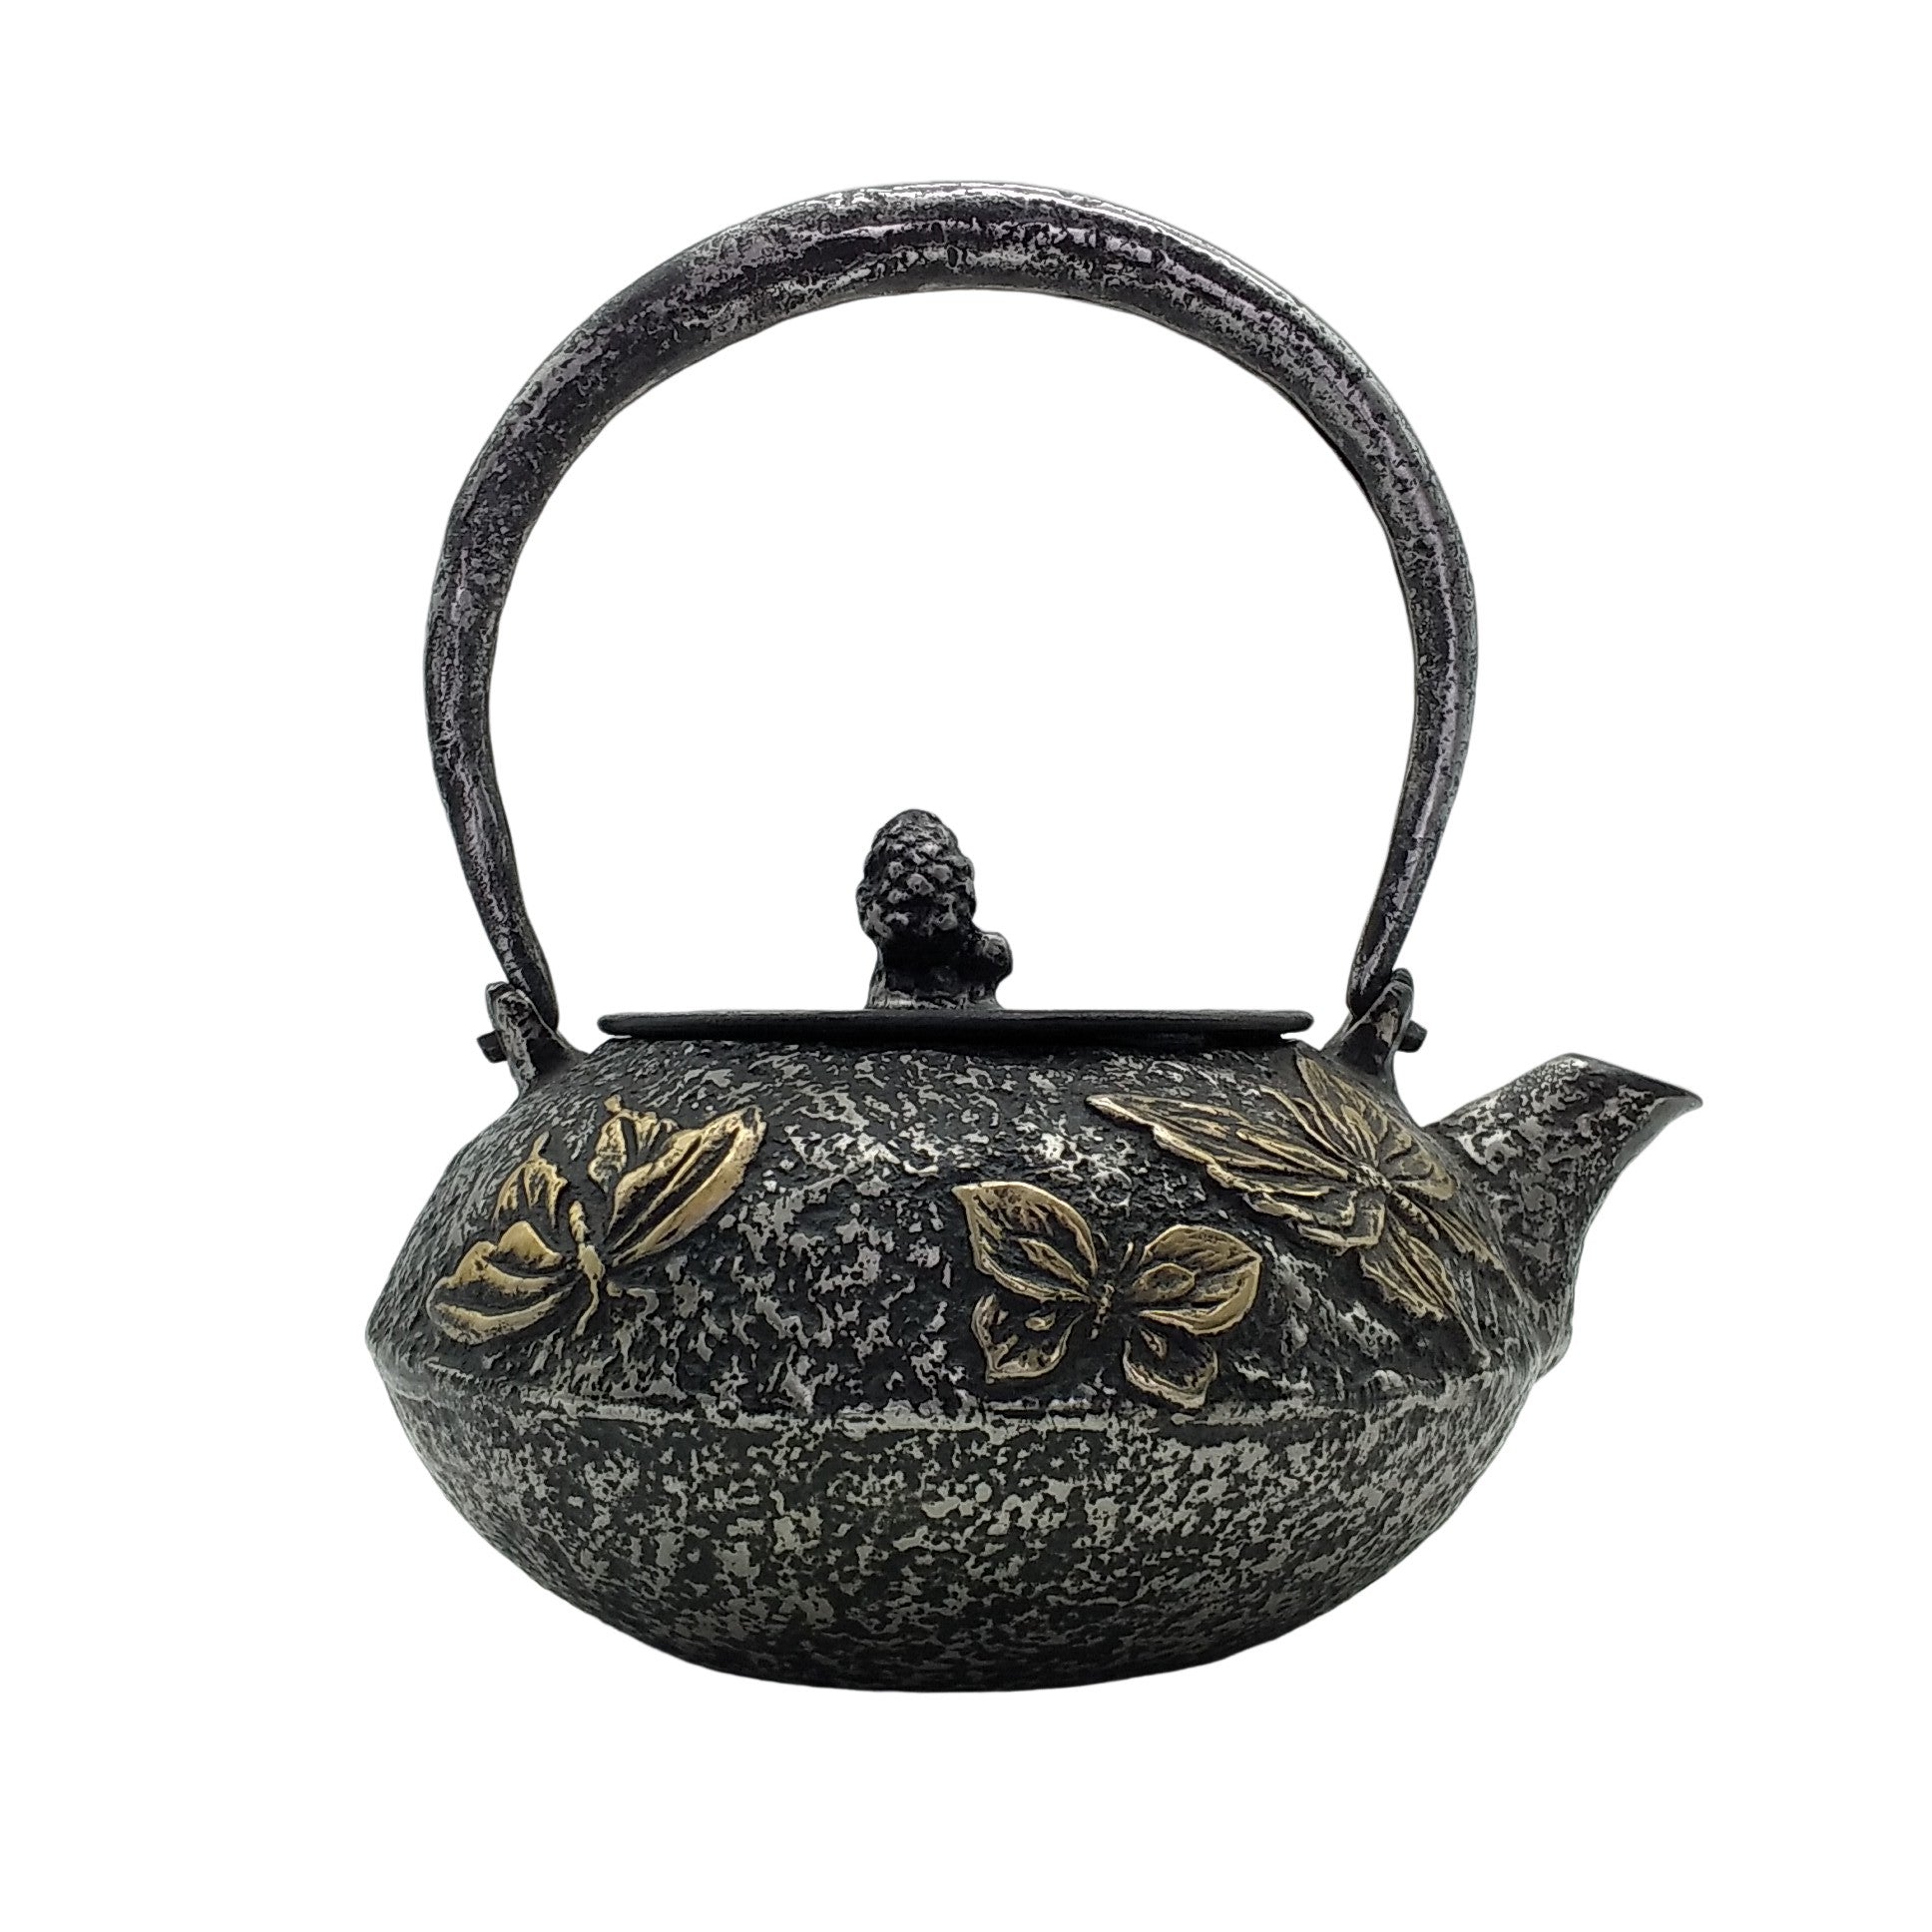 Original iron kettle -Traditional technique-